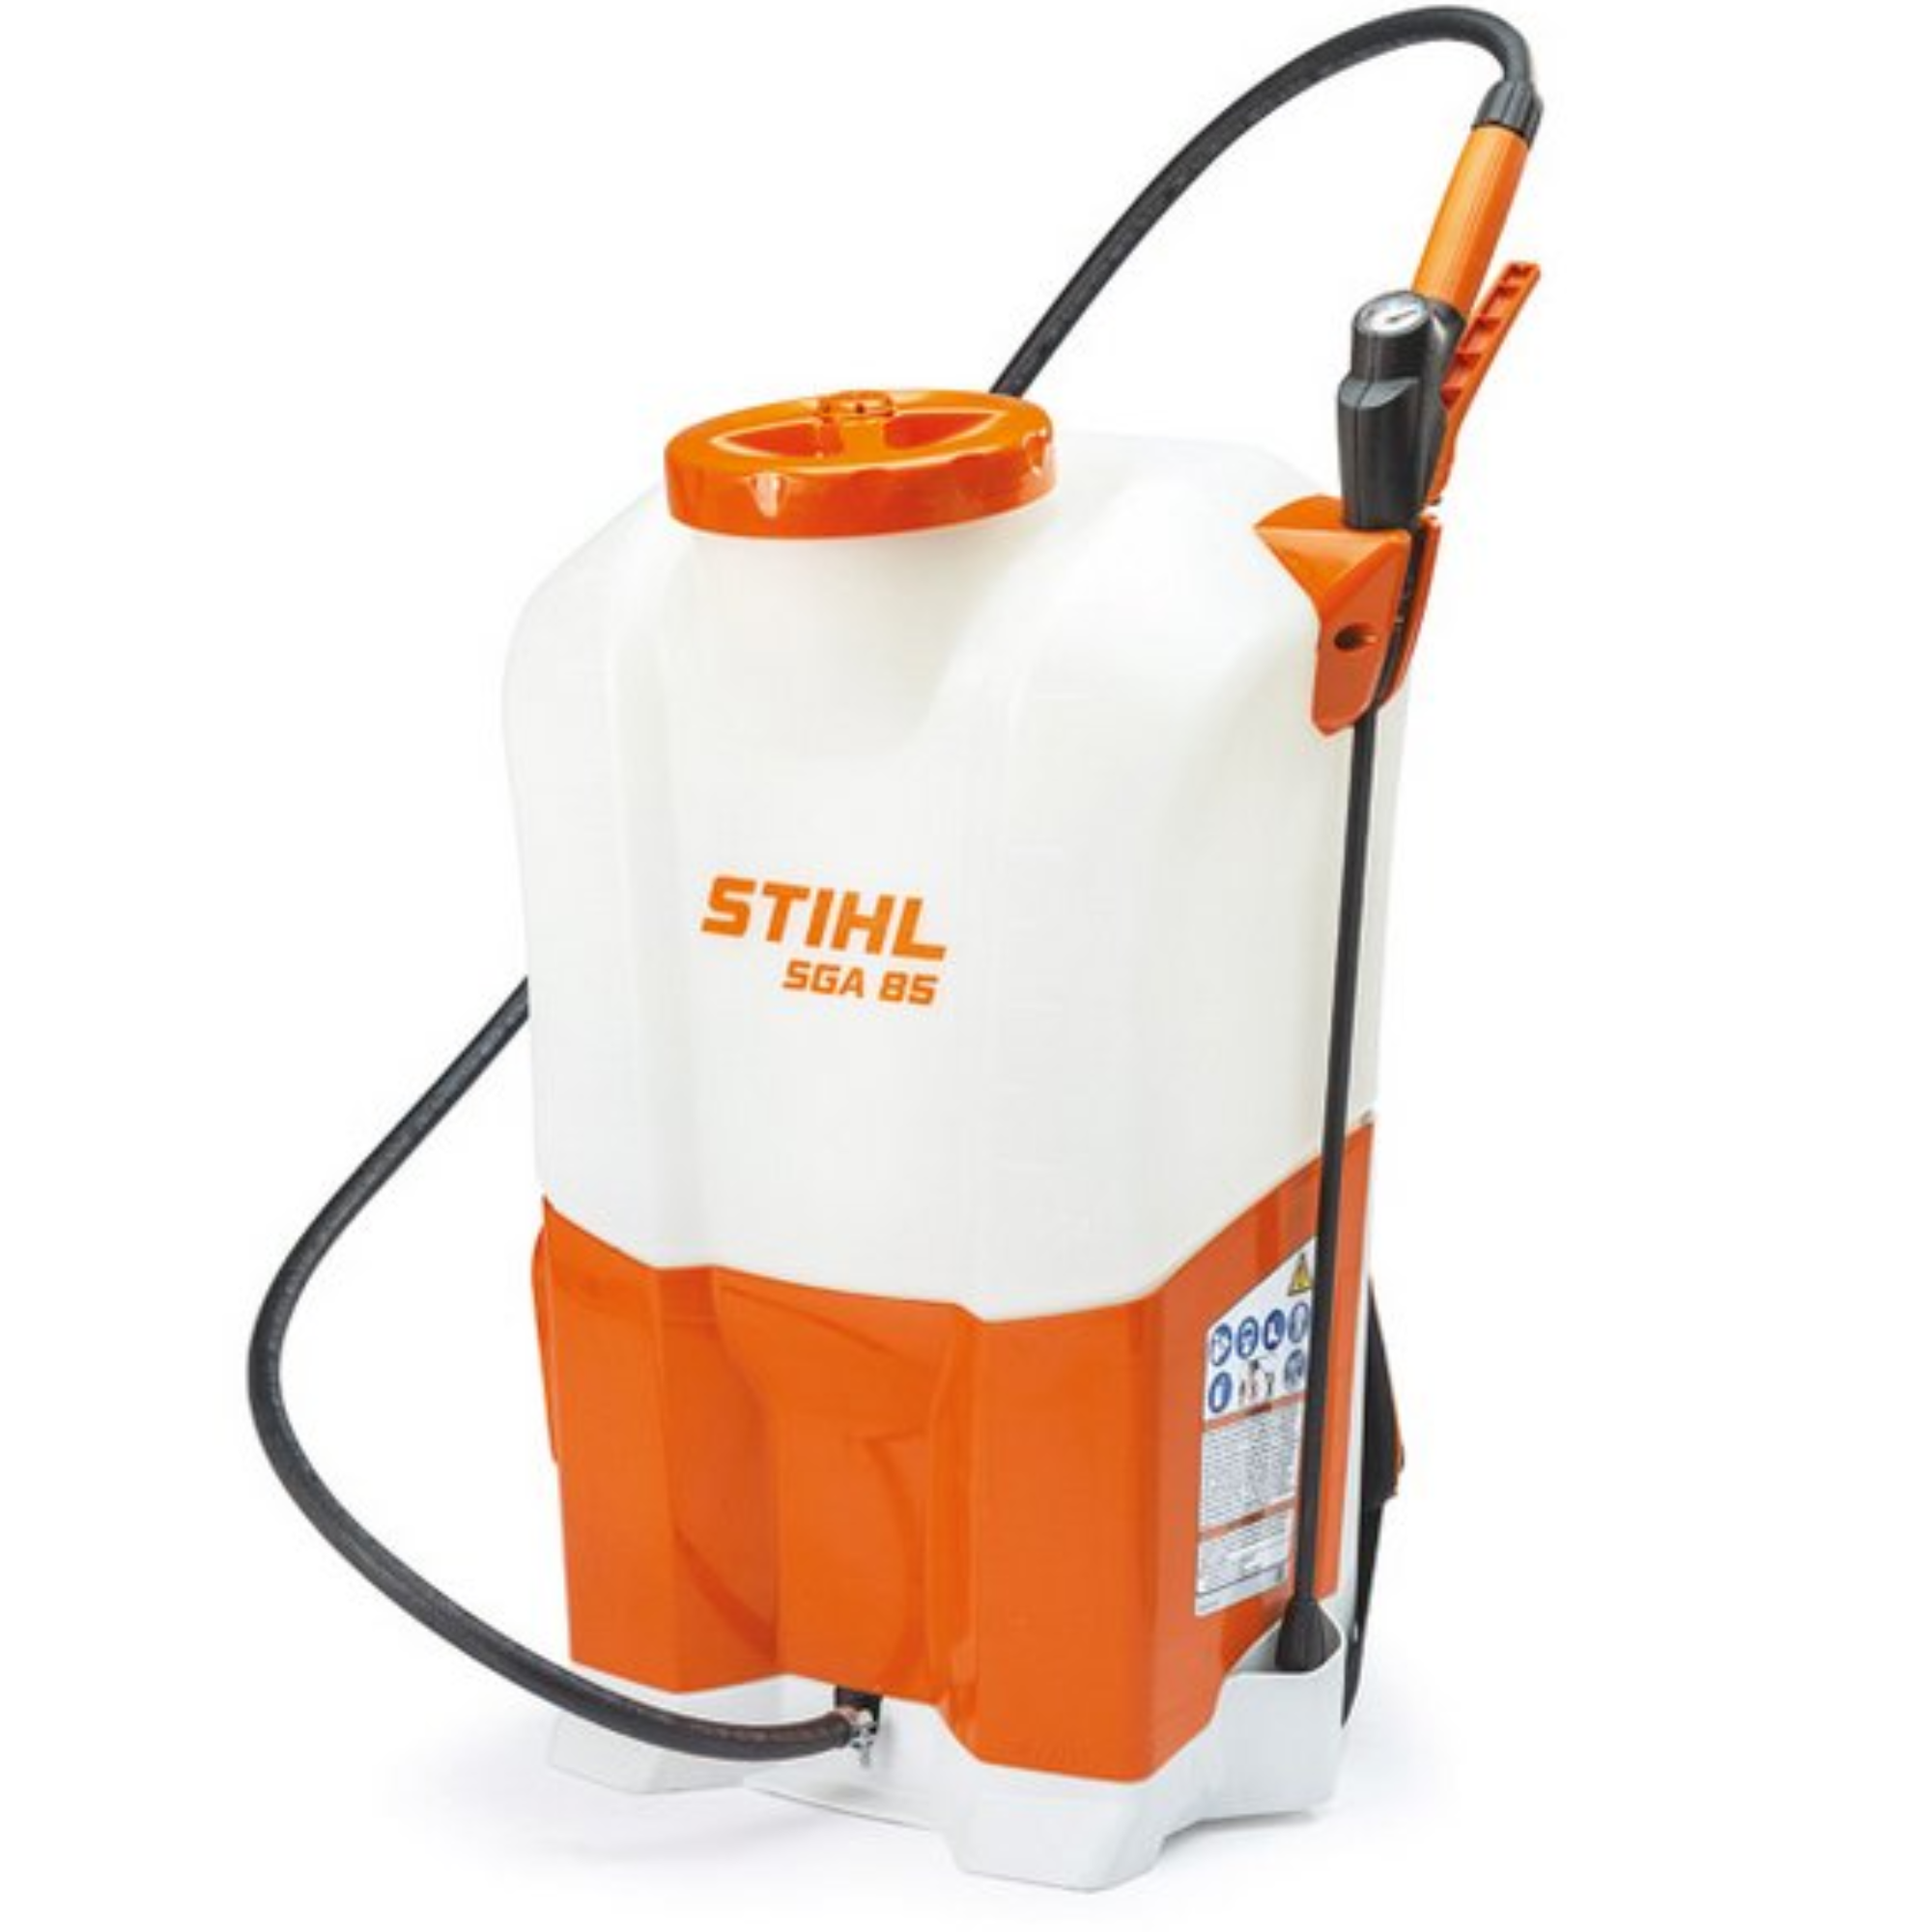 Stihl SGA 85 Battery Powered Sprayer